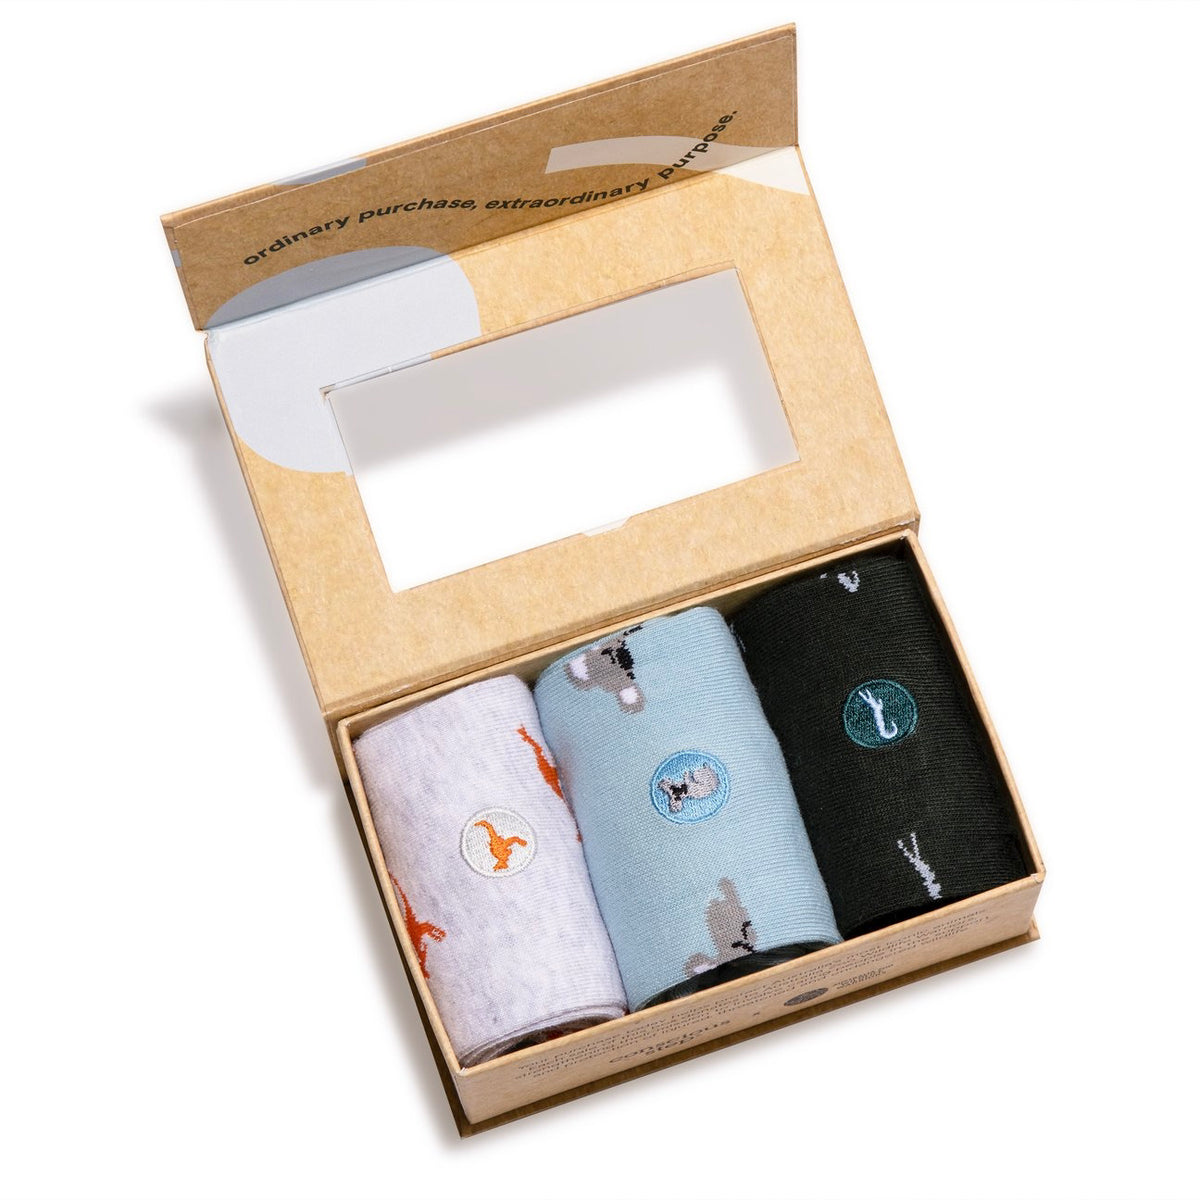 Socks that Protect Animals Gift Box 3pk